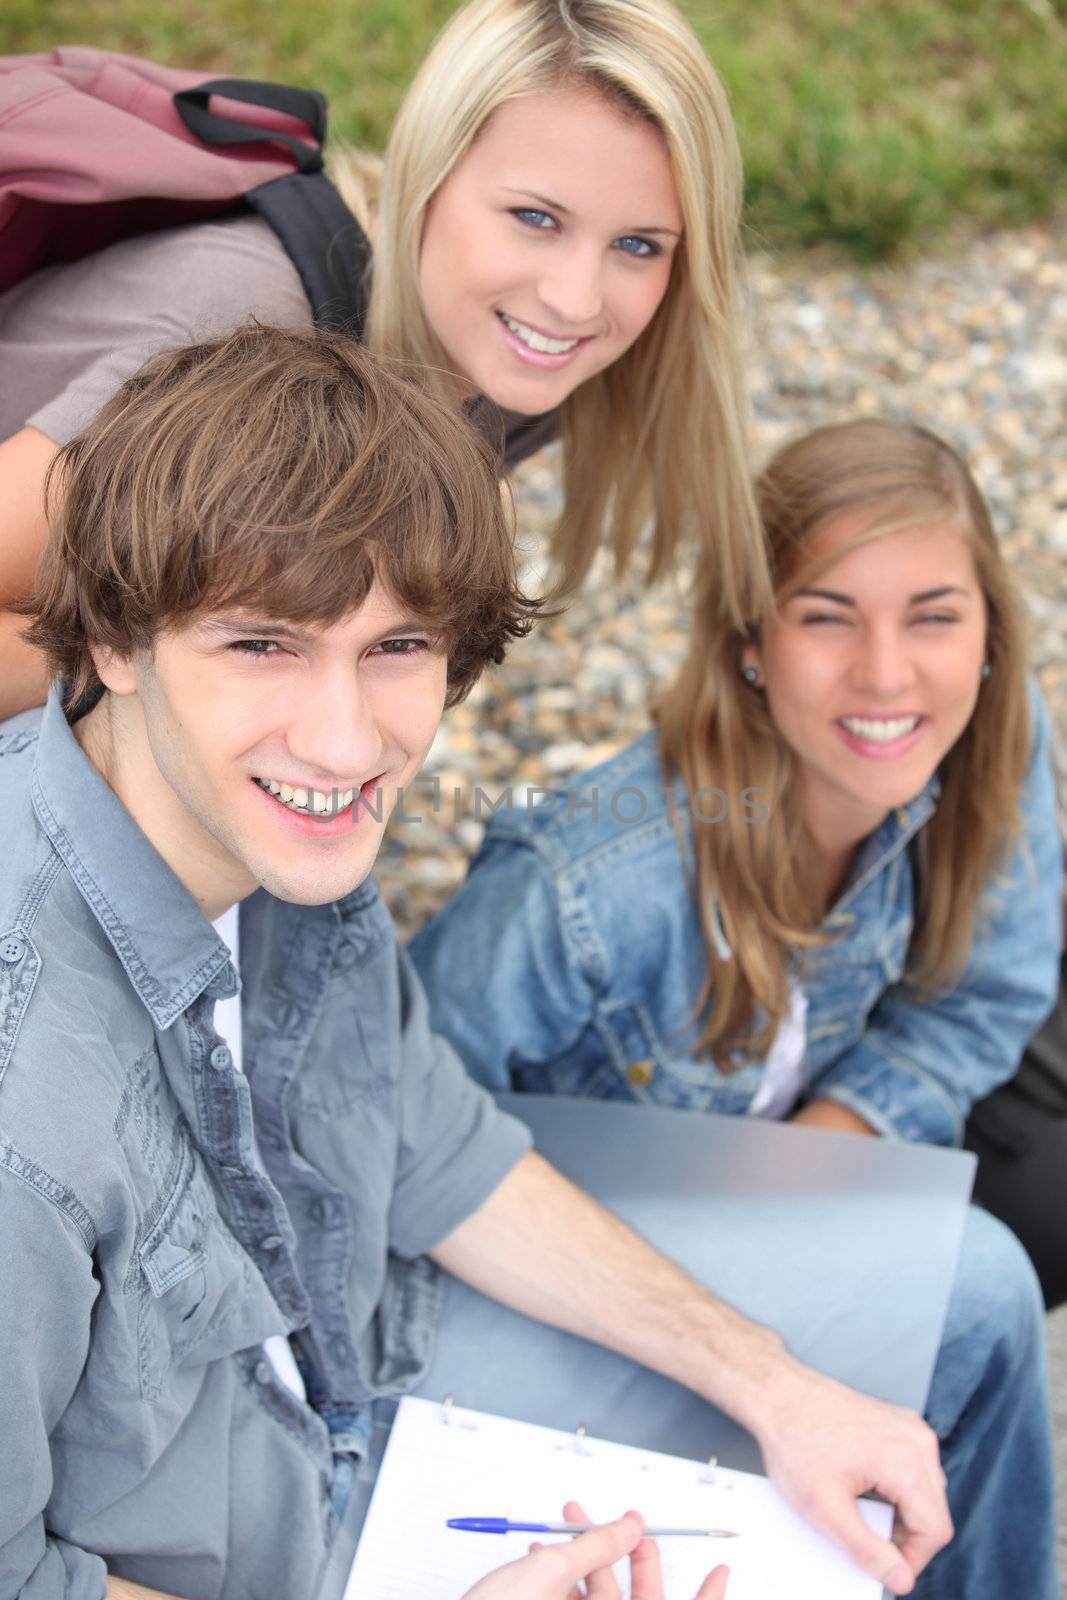 Three high school friends outdoors